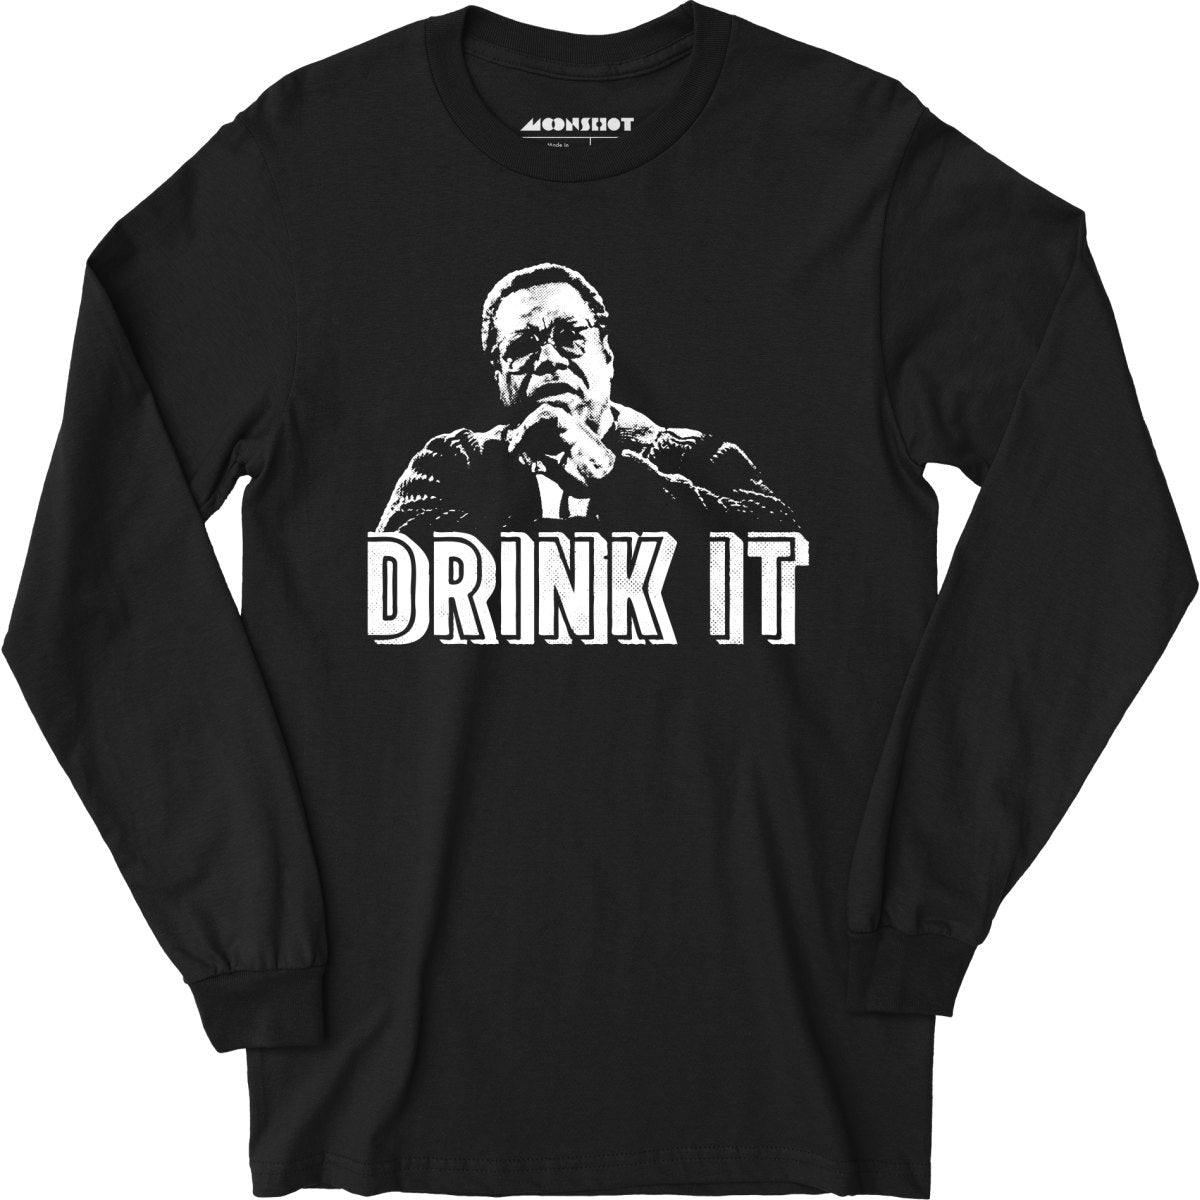 Drink It! - Long Sleeve T-Shirt